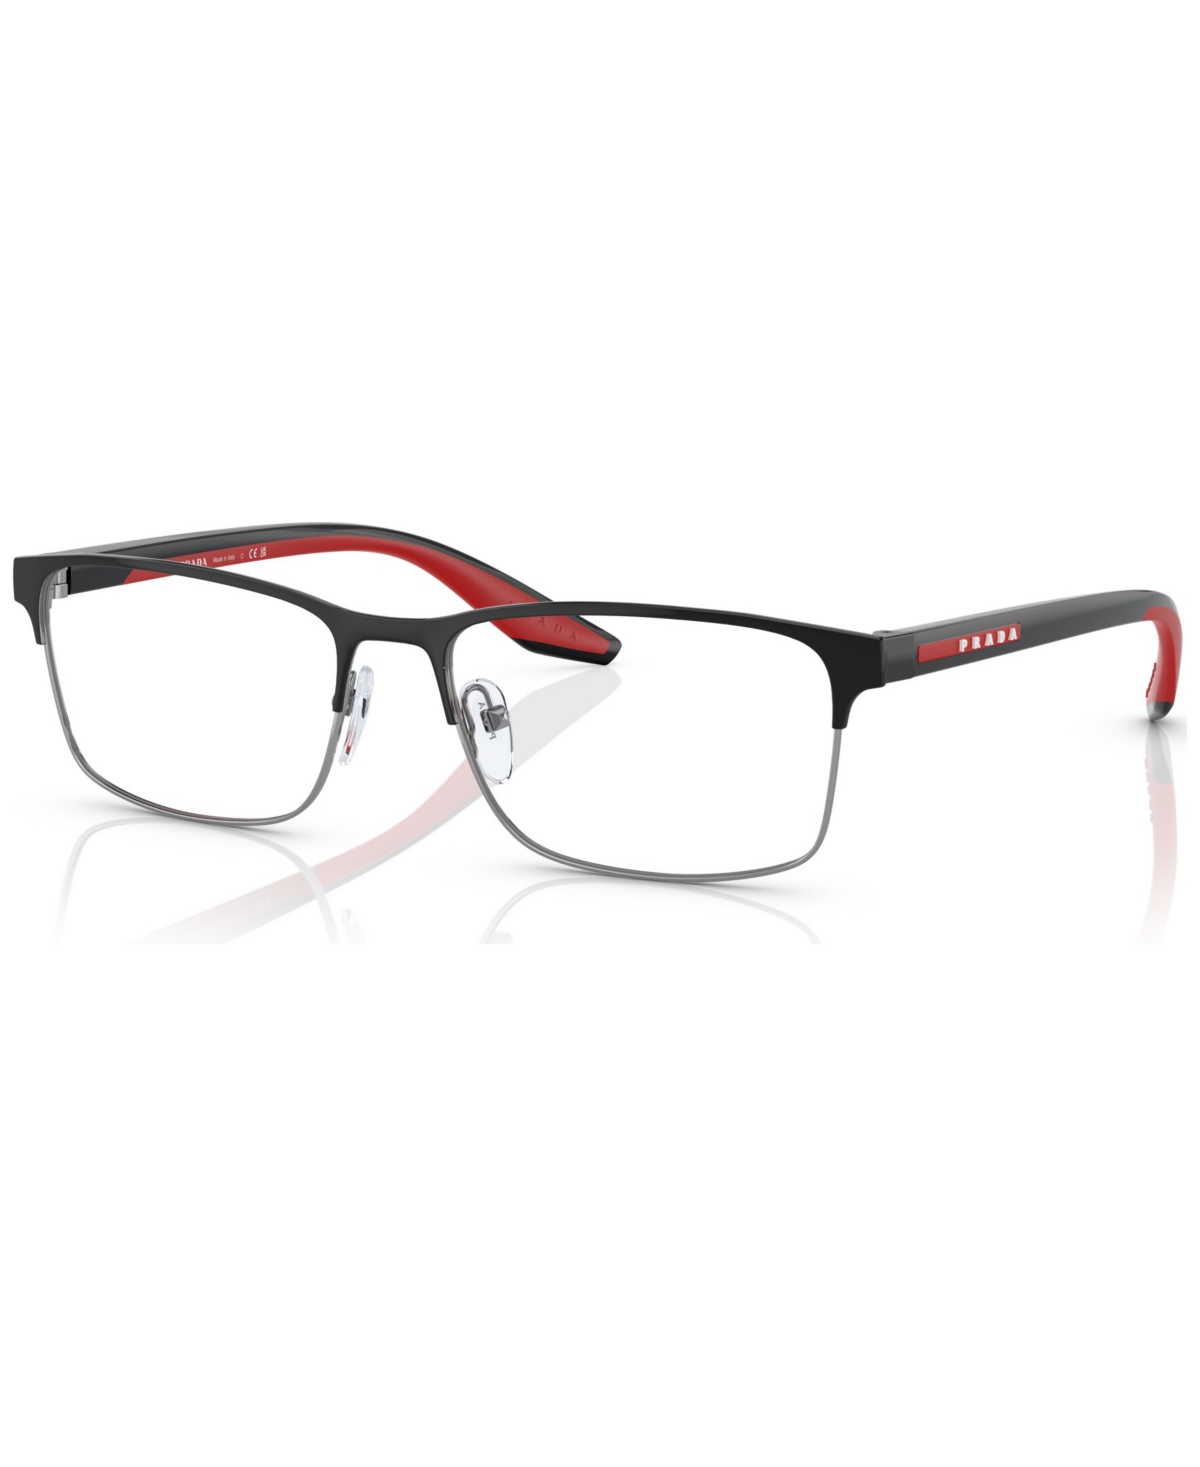 Men's Rectangle Eyeglasses, Ps 50PV55-o - Black, Silver-Tone